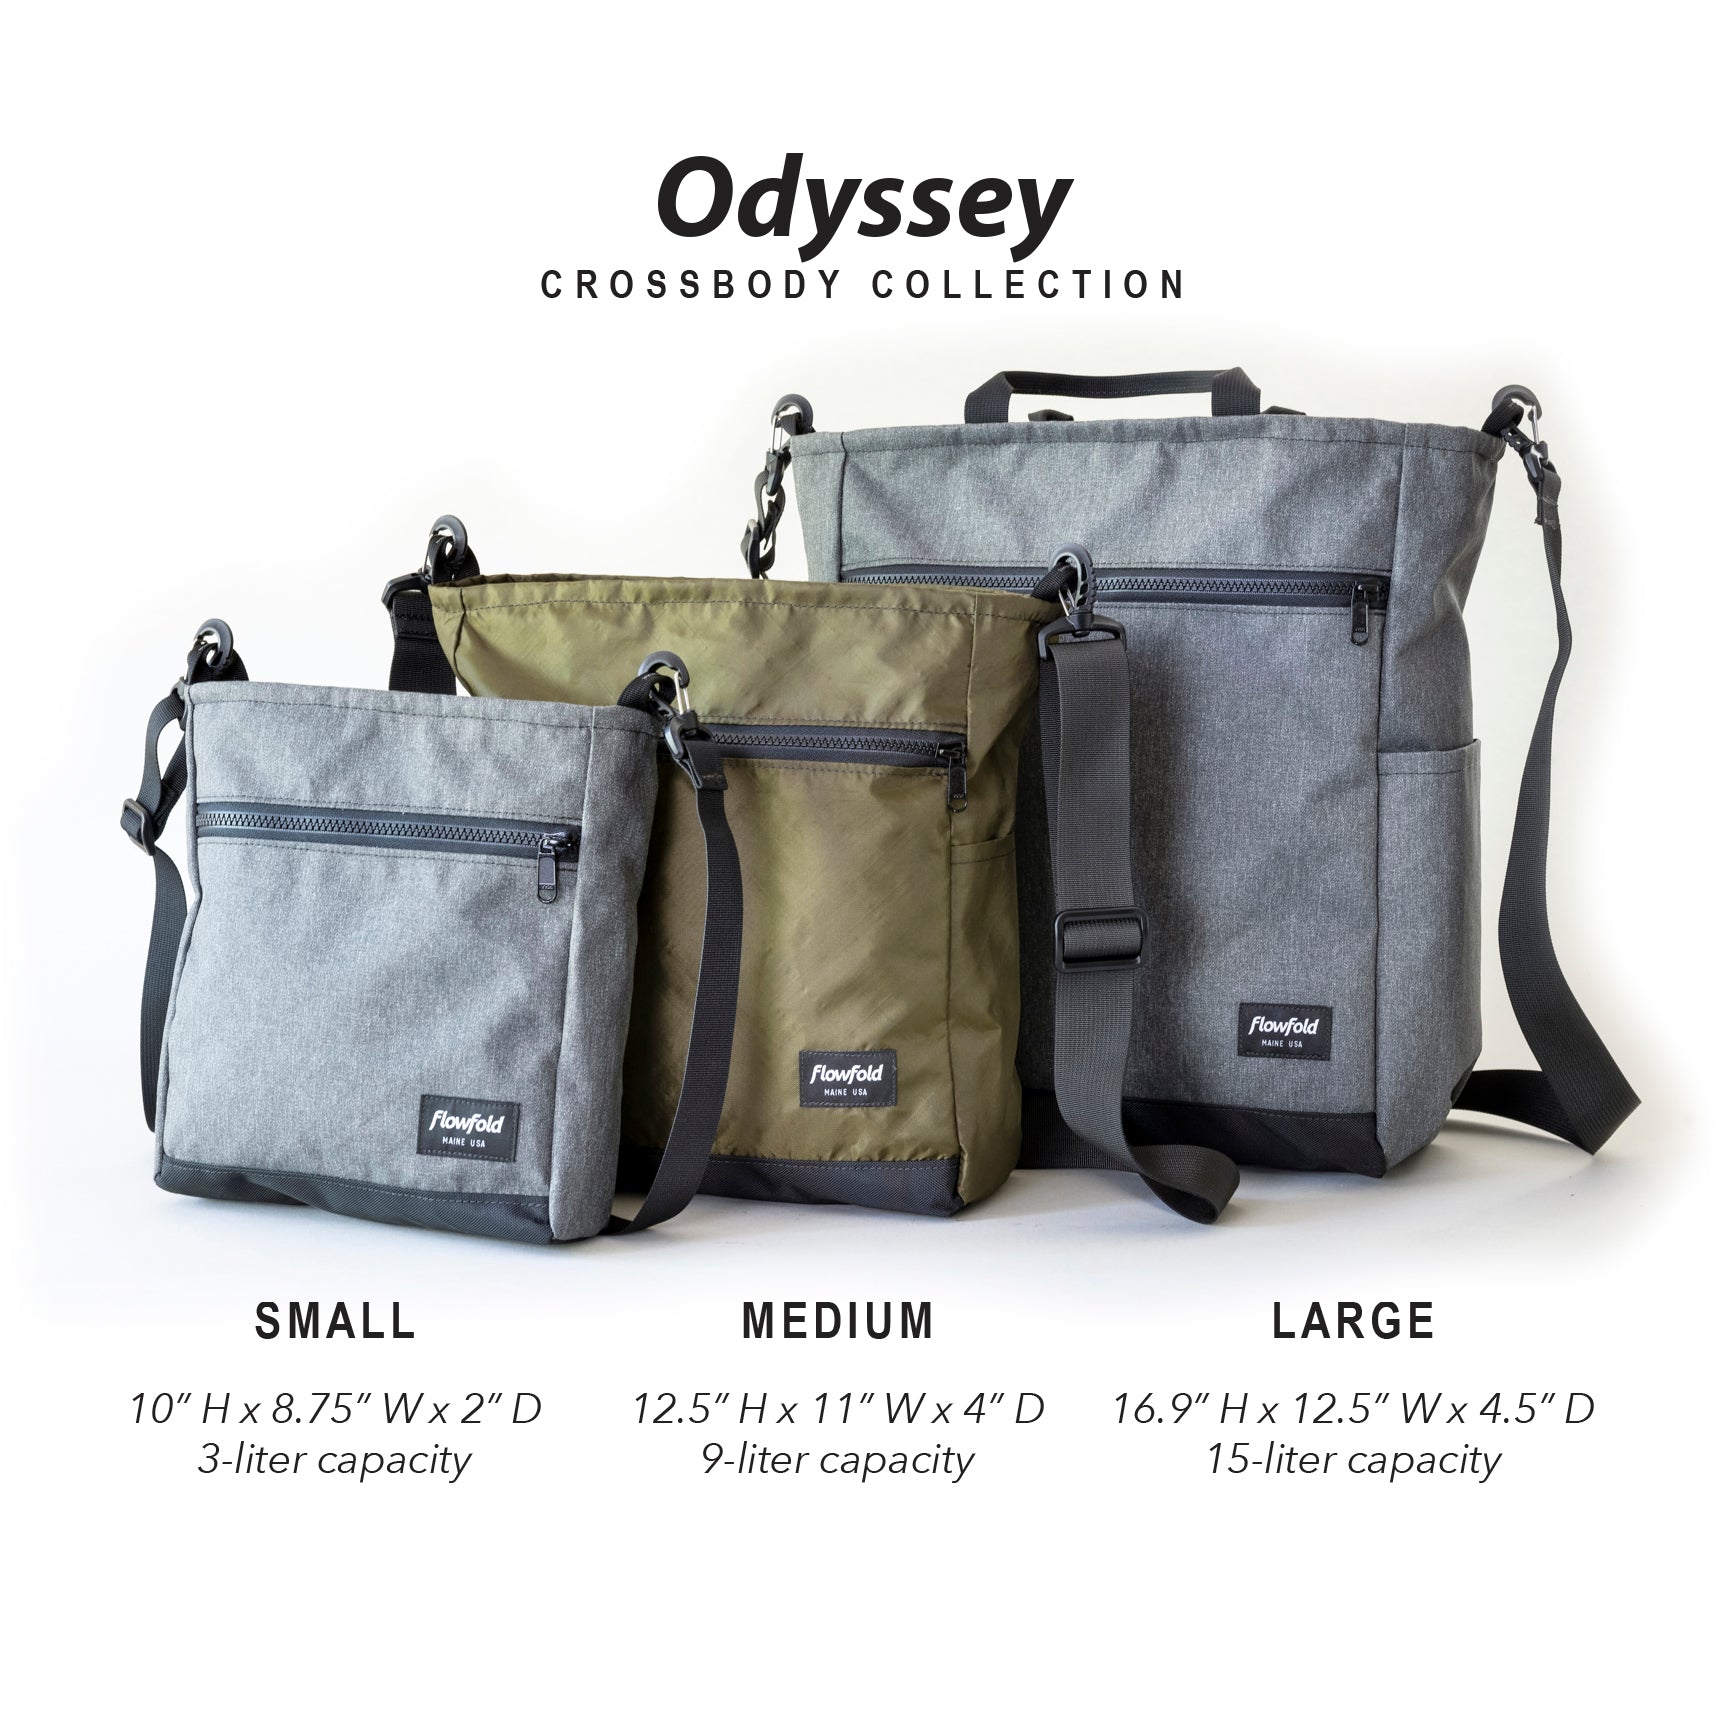 Flowfold Odyssey Crossbody Tote 15L Large Travel Bag